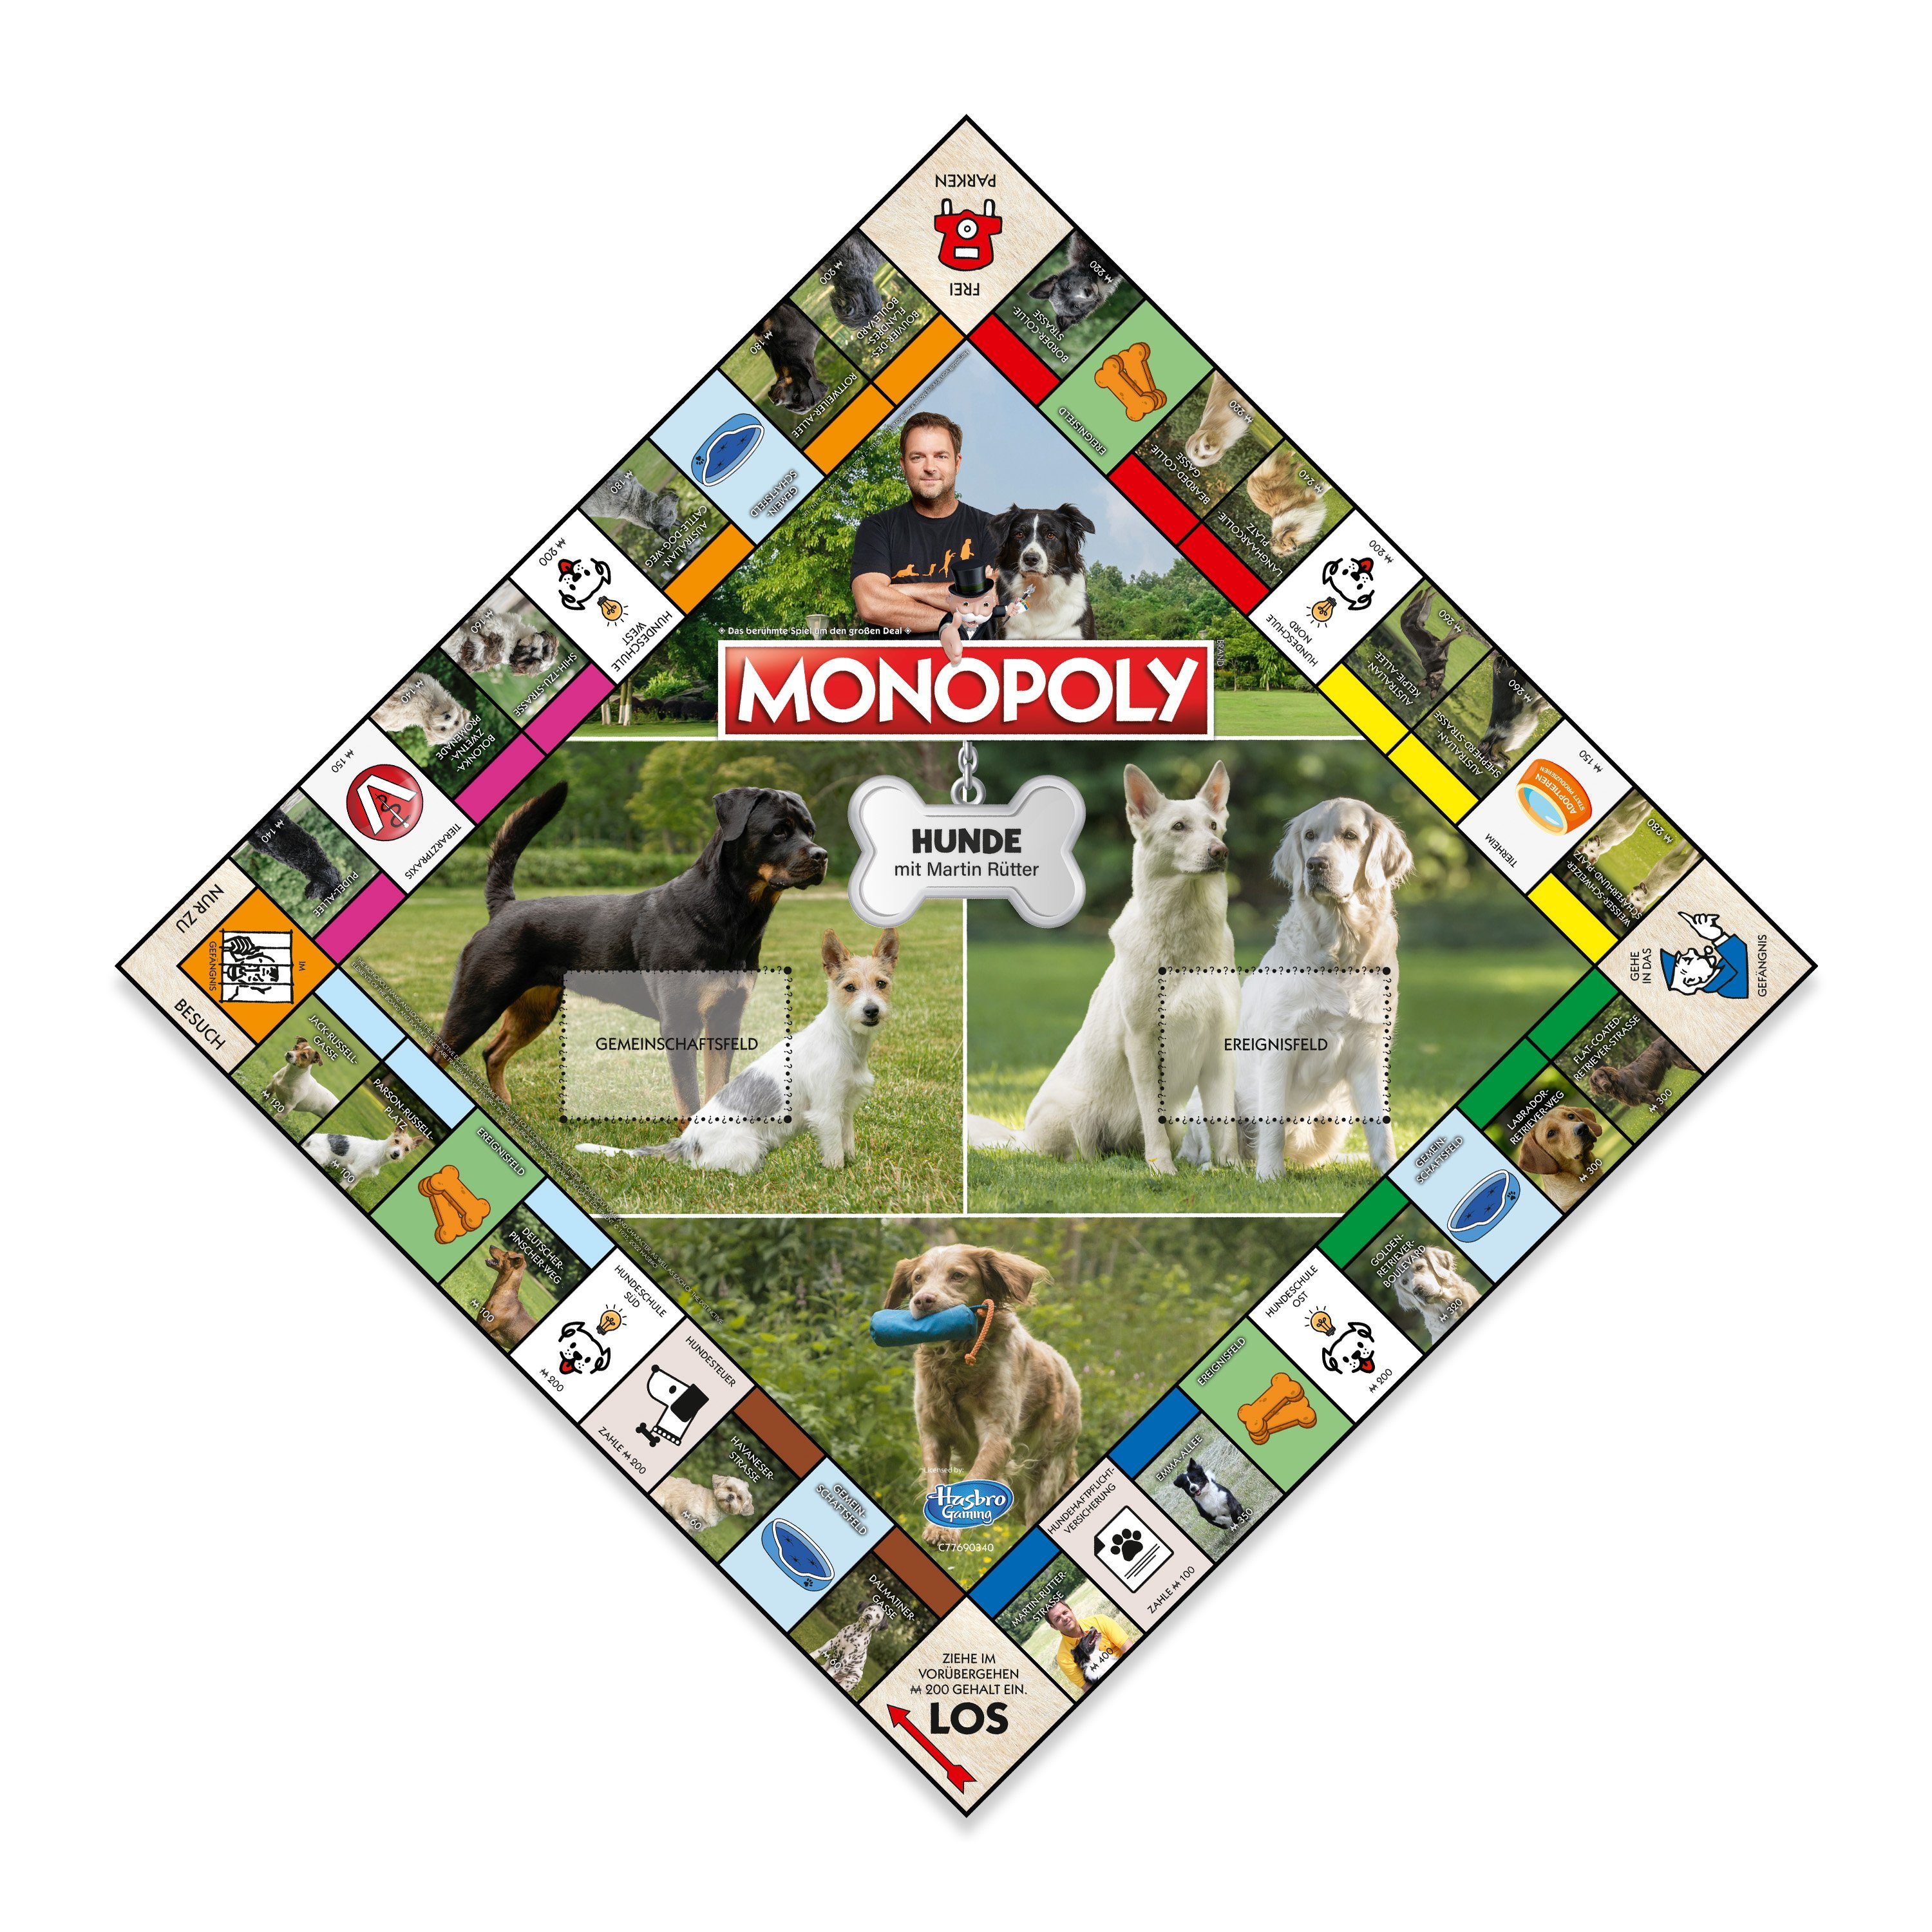 Winning Martin (mit Spiel, Moves - Rütter) Monopoly Brettspiel Hunde